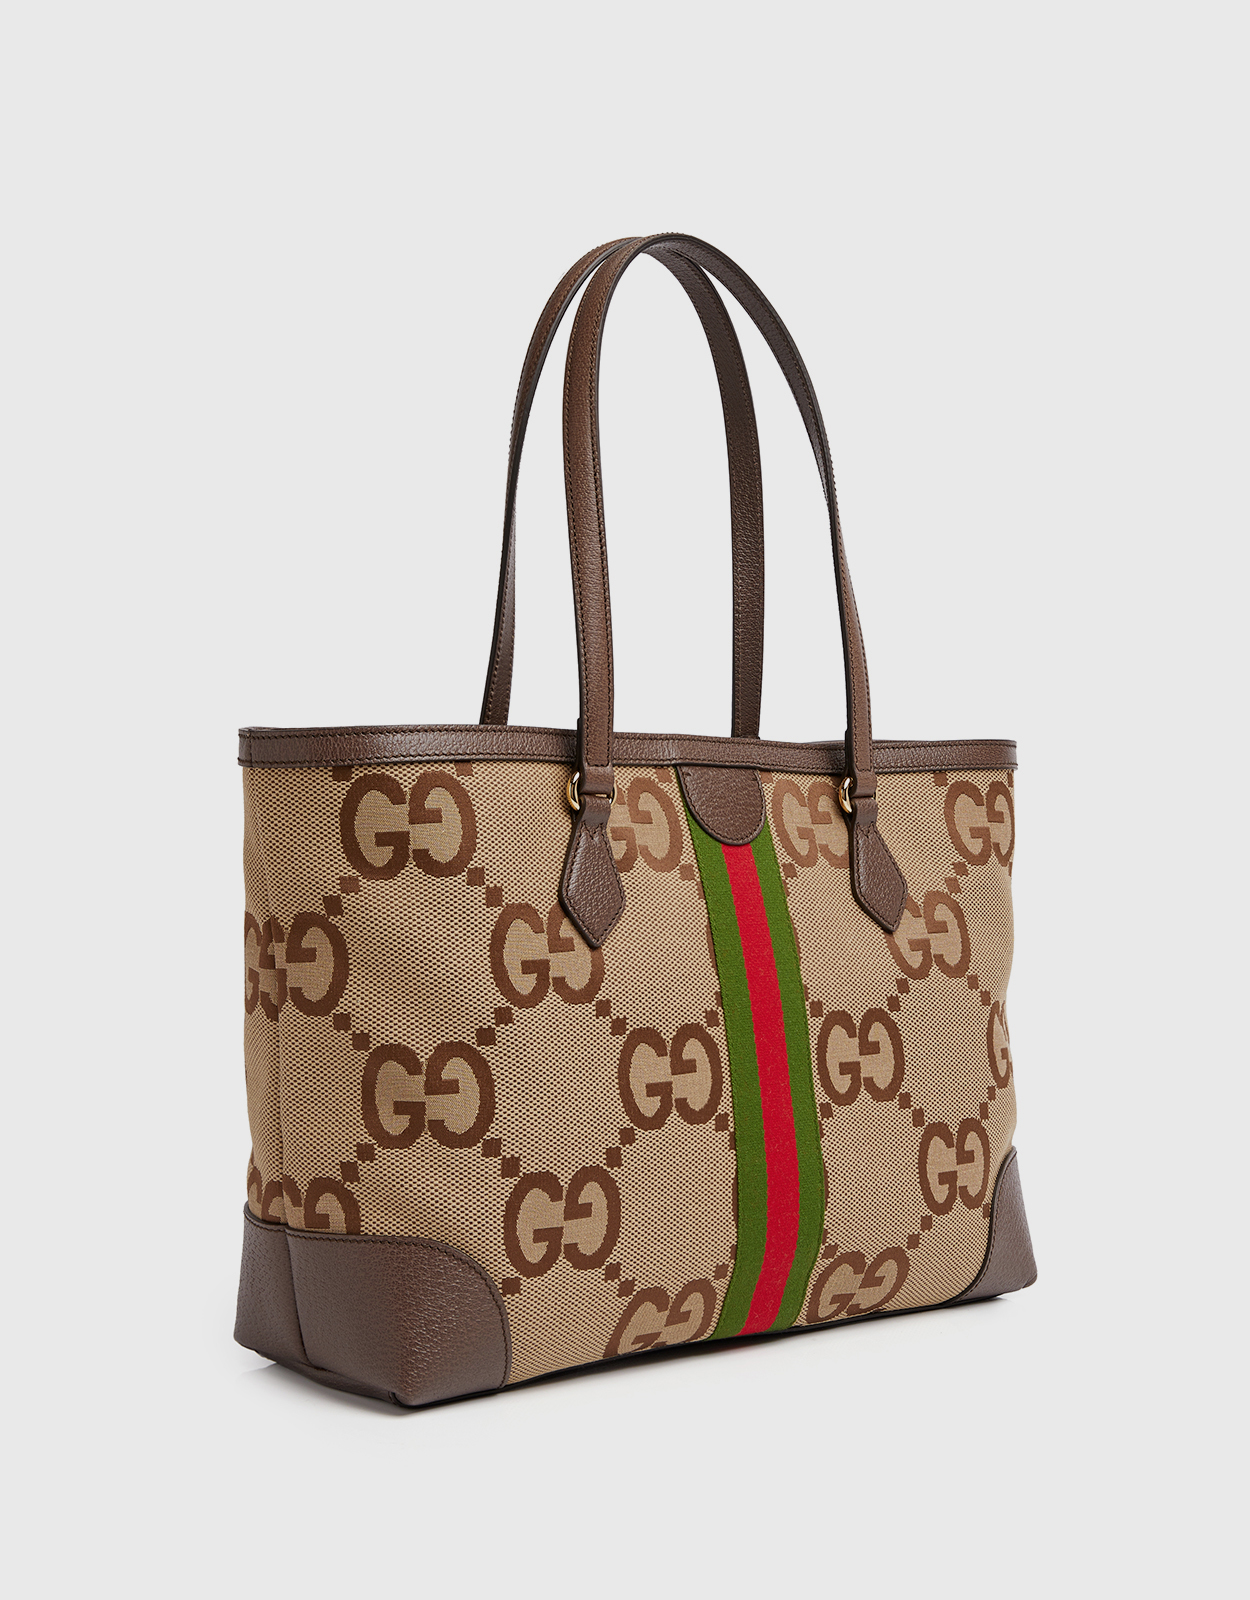 Jumbo GG mini tote bag in camel and ebony GG canvas